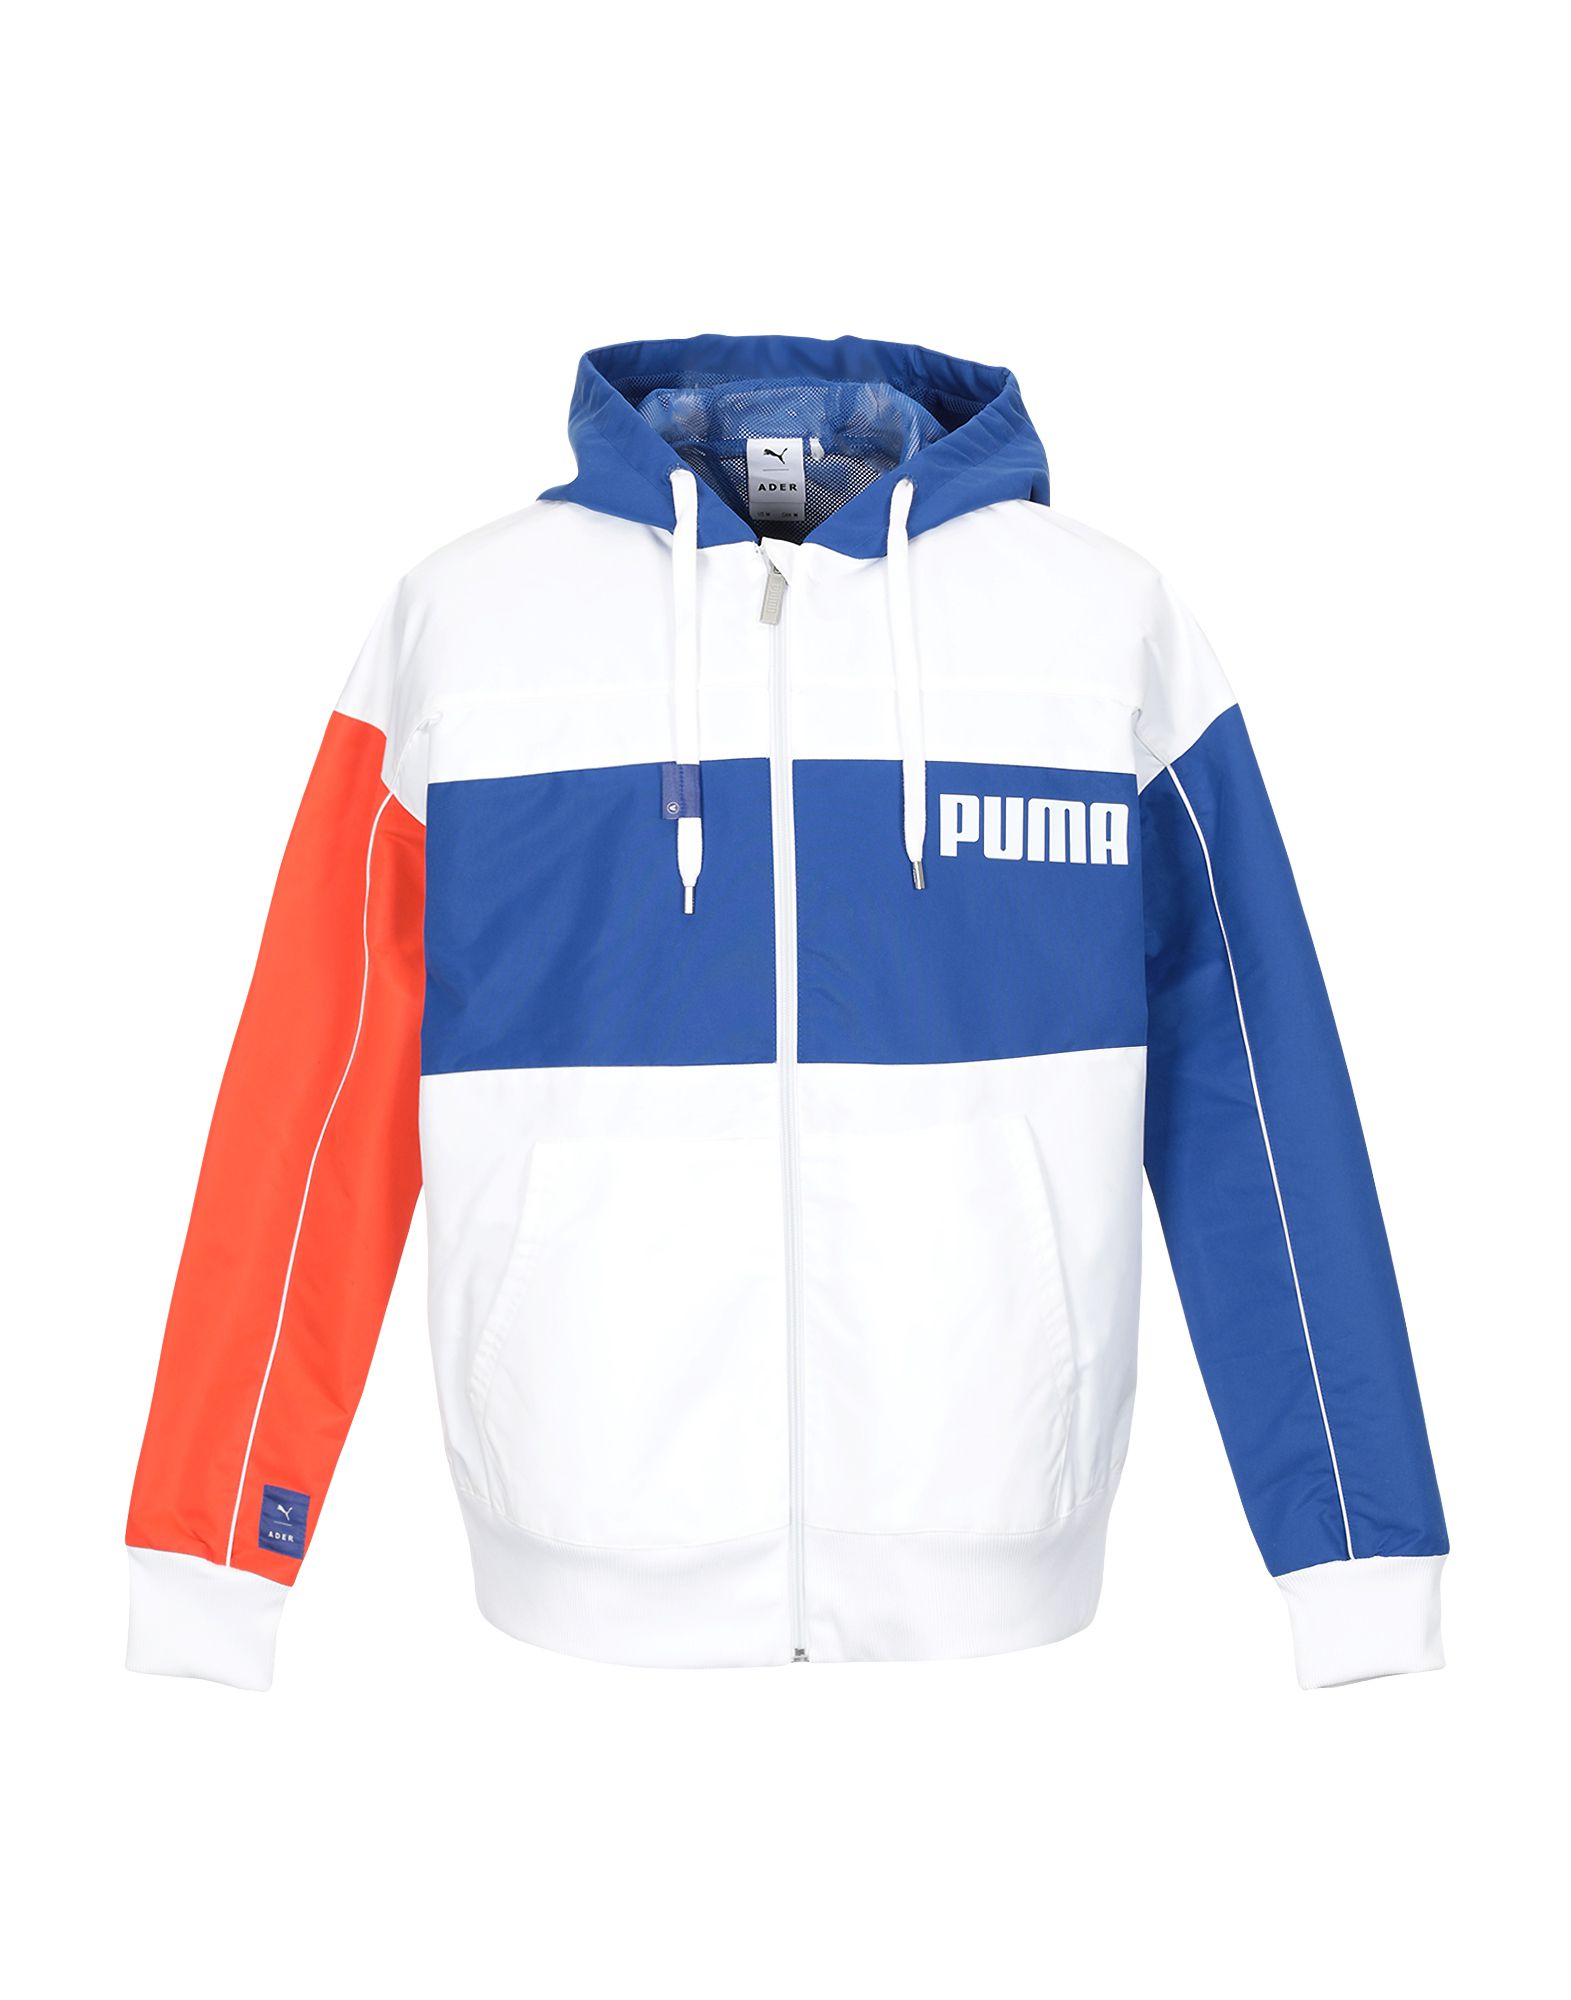 puma waterproof jacket india